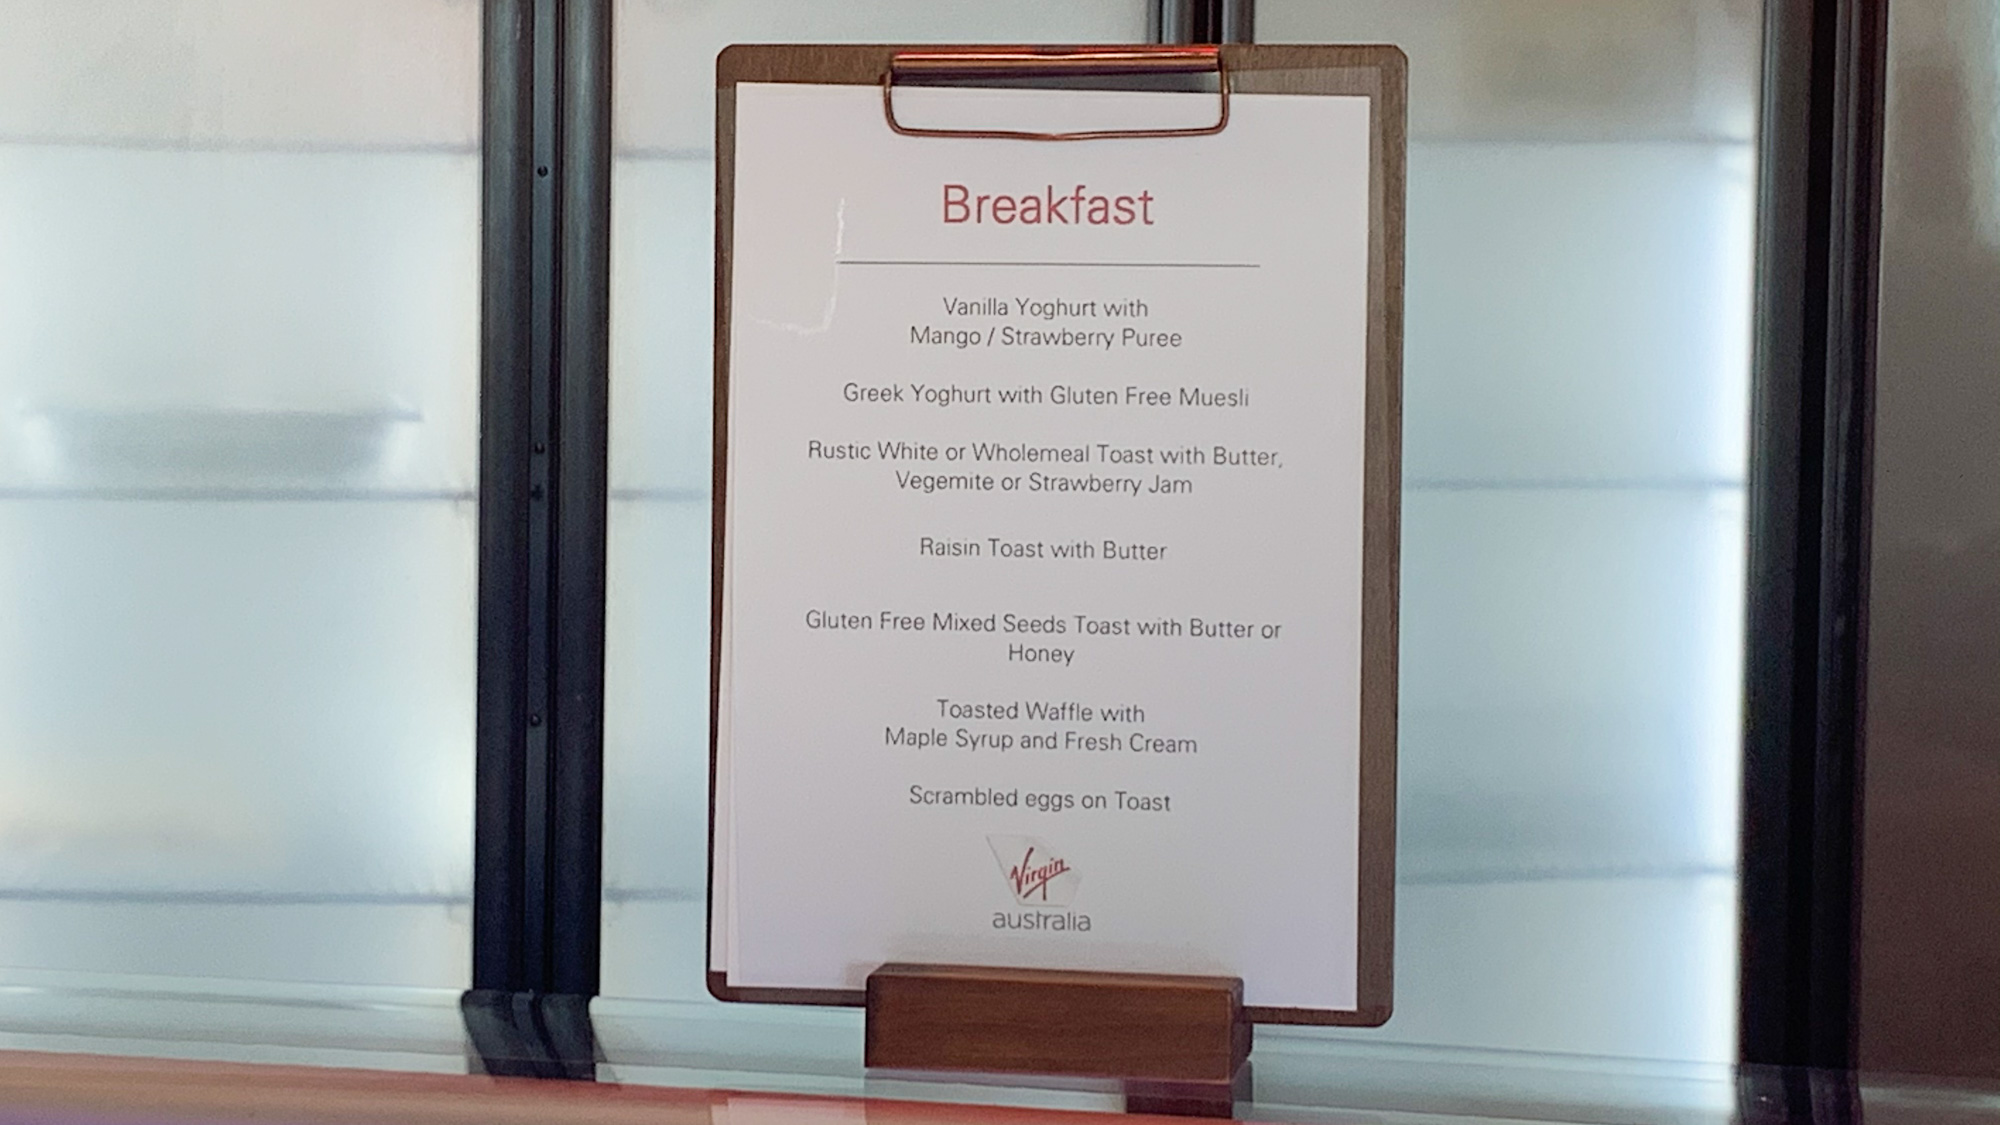 Virgin Australia Melbourne Lounge breakfast menu